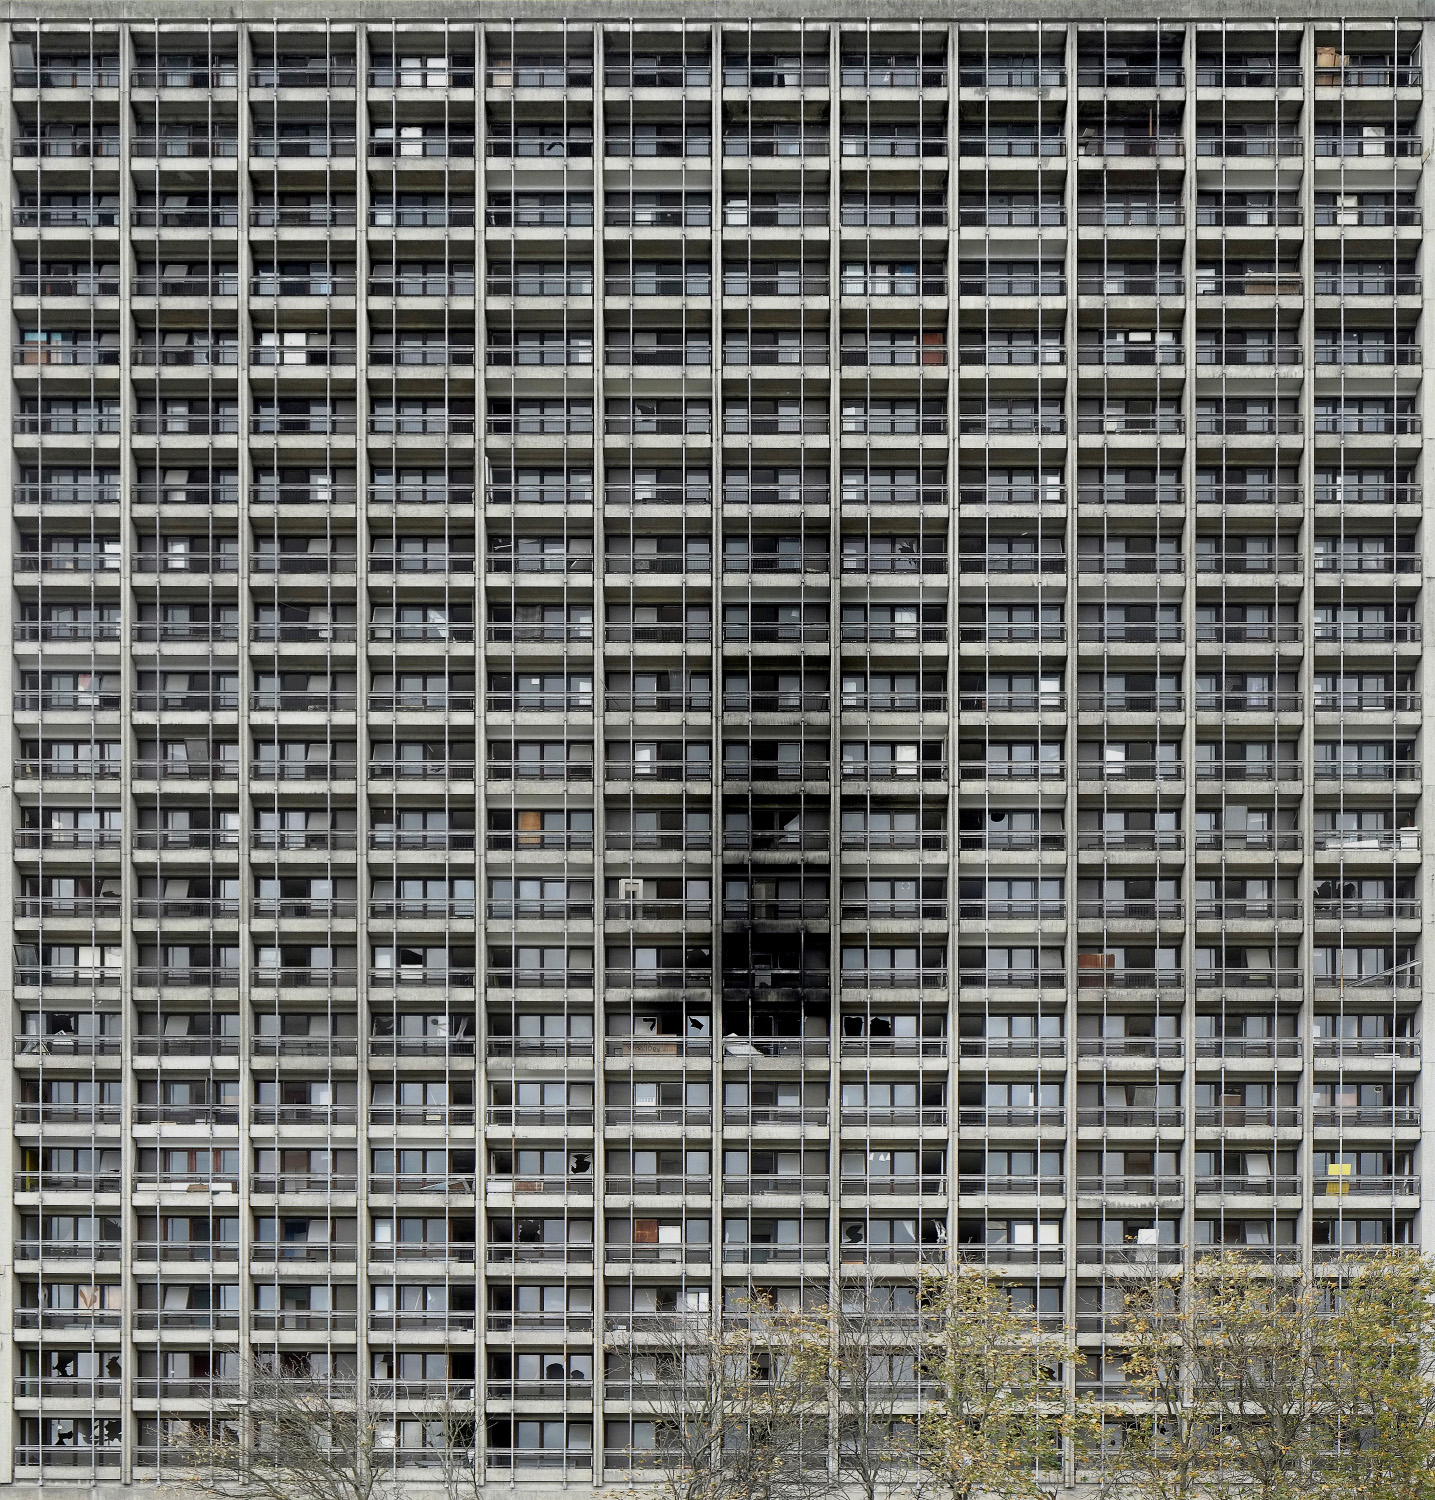 Smoking Area, Public Housing Complex, Liège, Belgium, 2014 